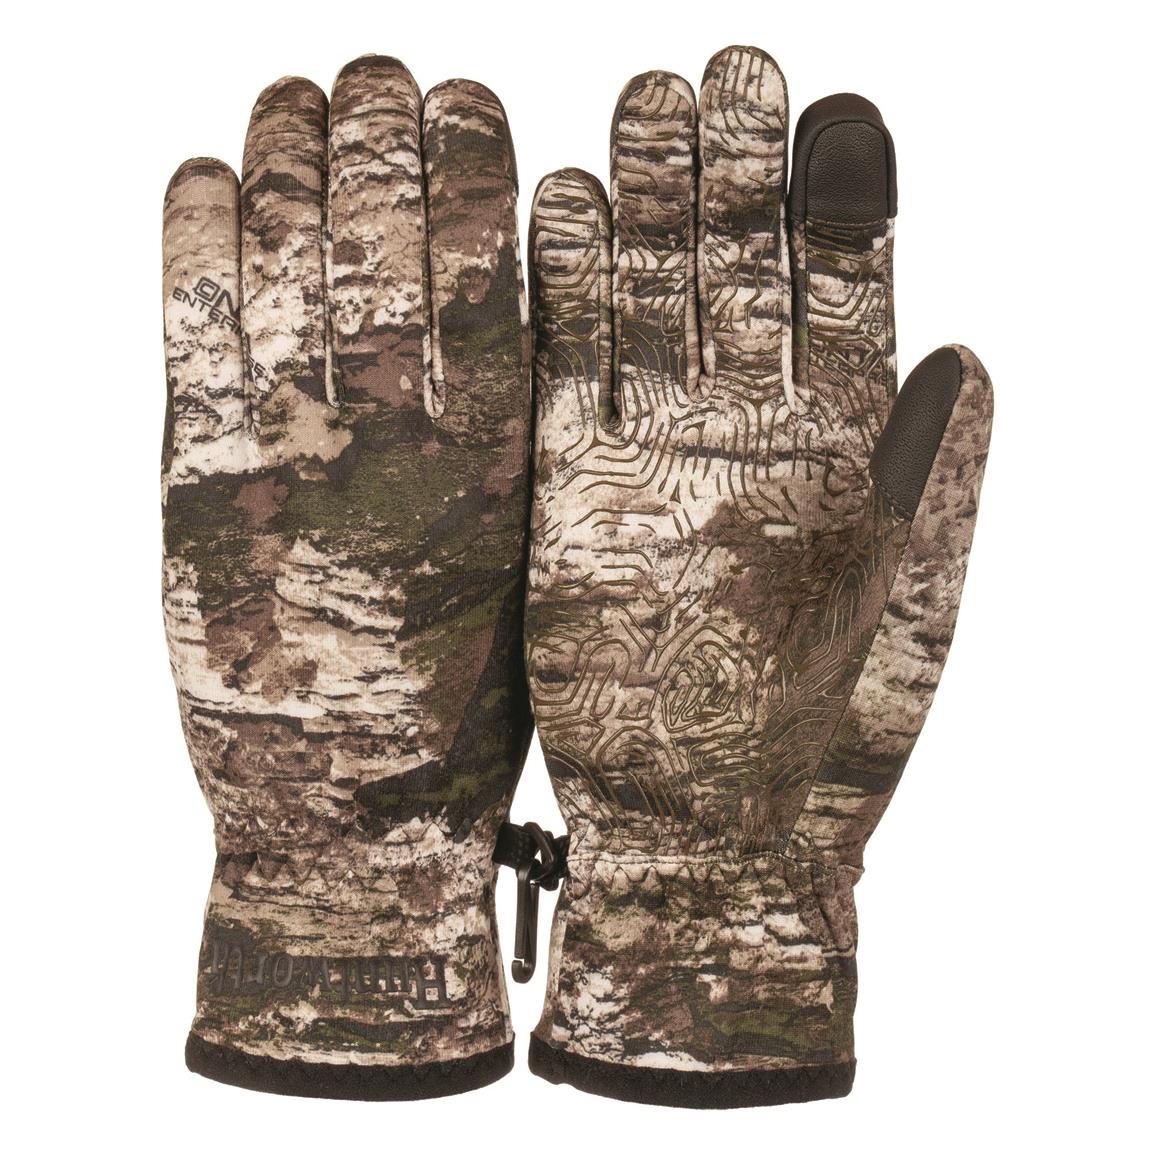 Huntworth Men's Macomb Waterproof Midweight Hunting Gloves, Tarnen